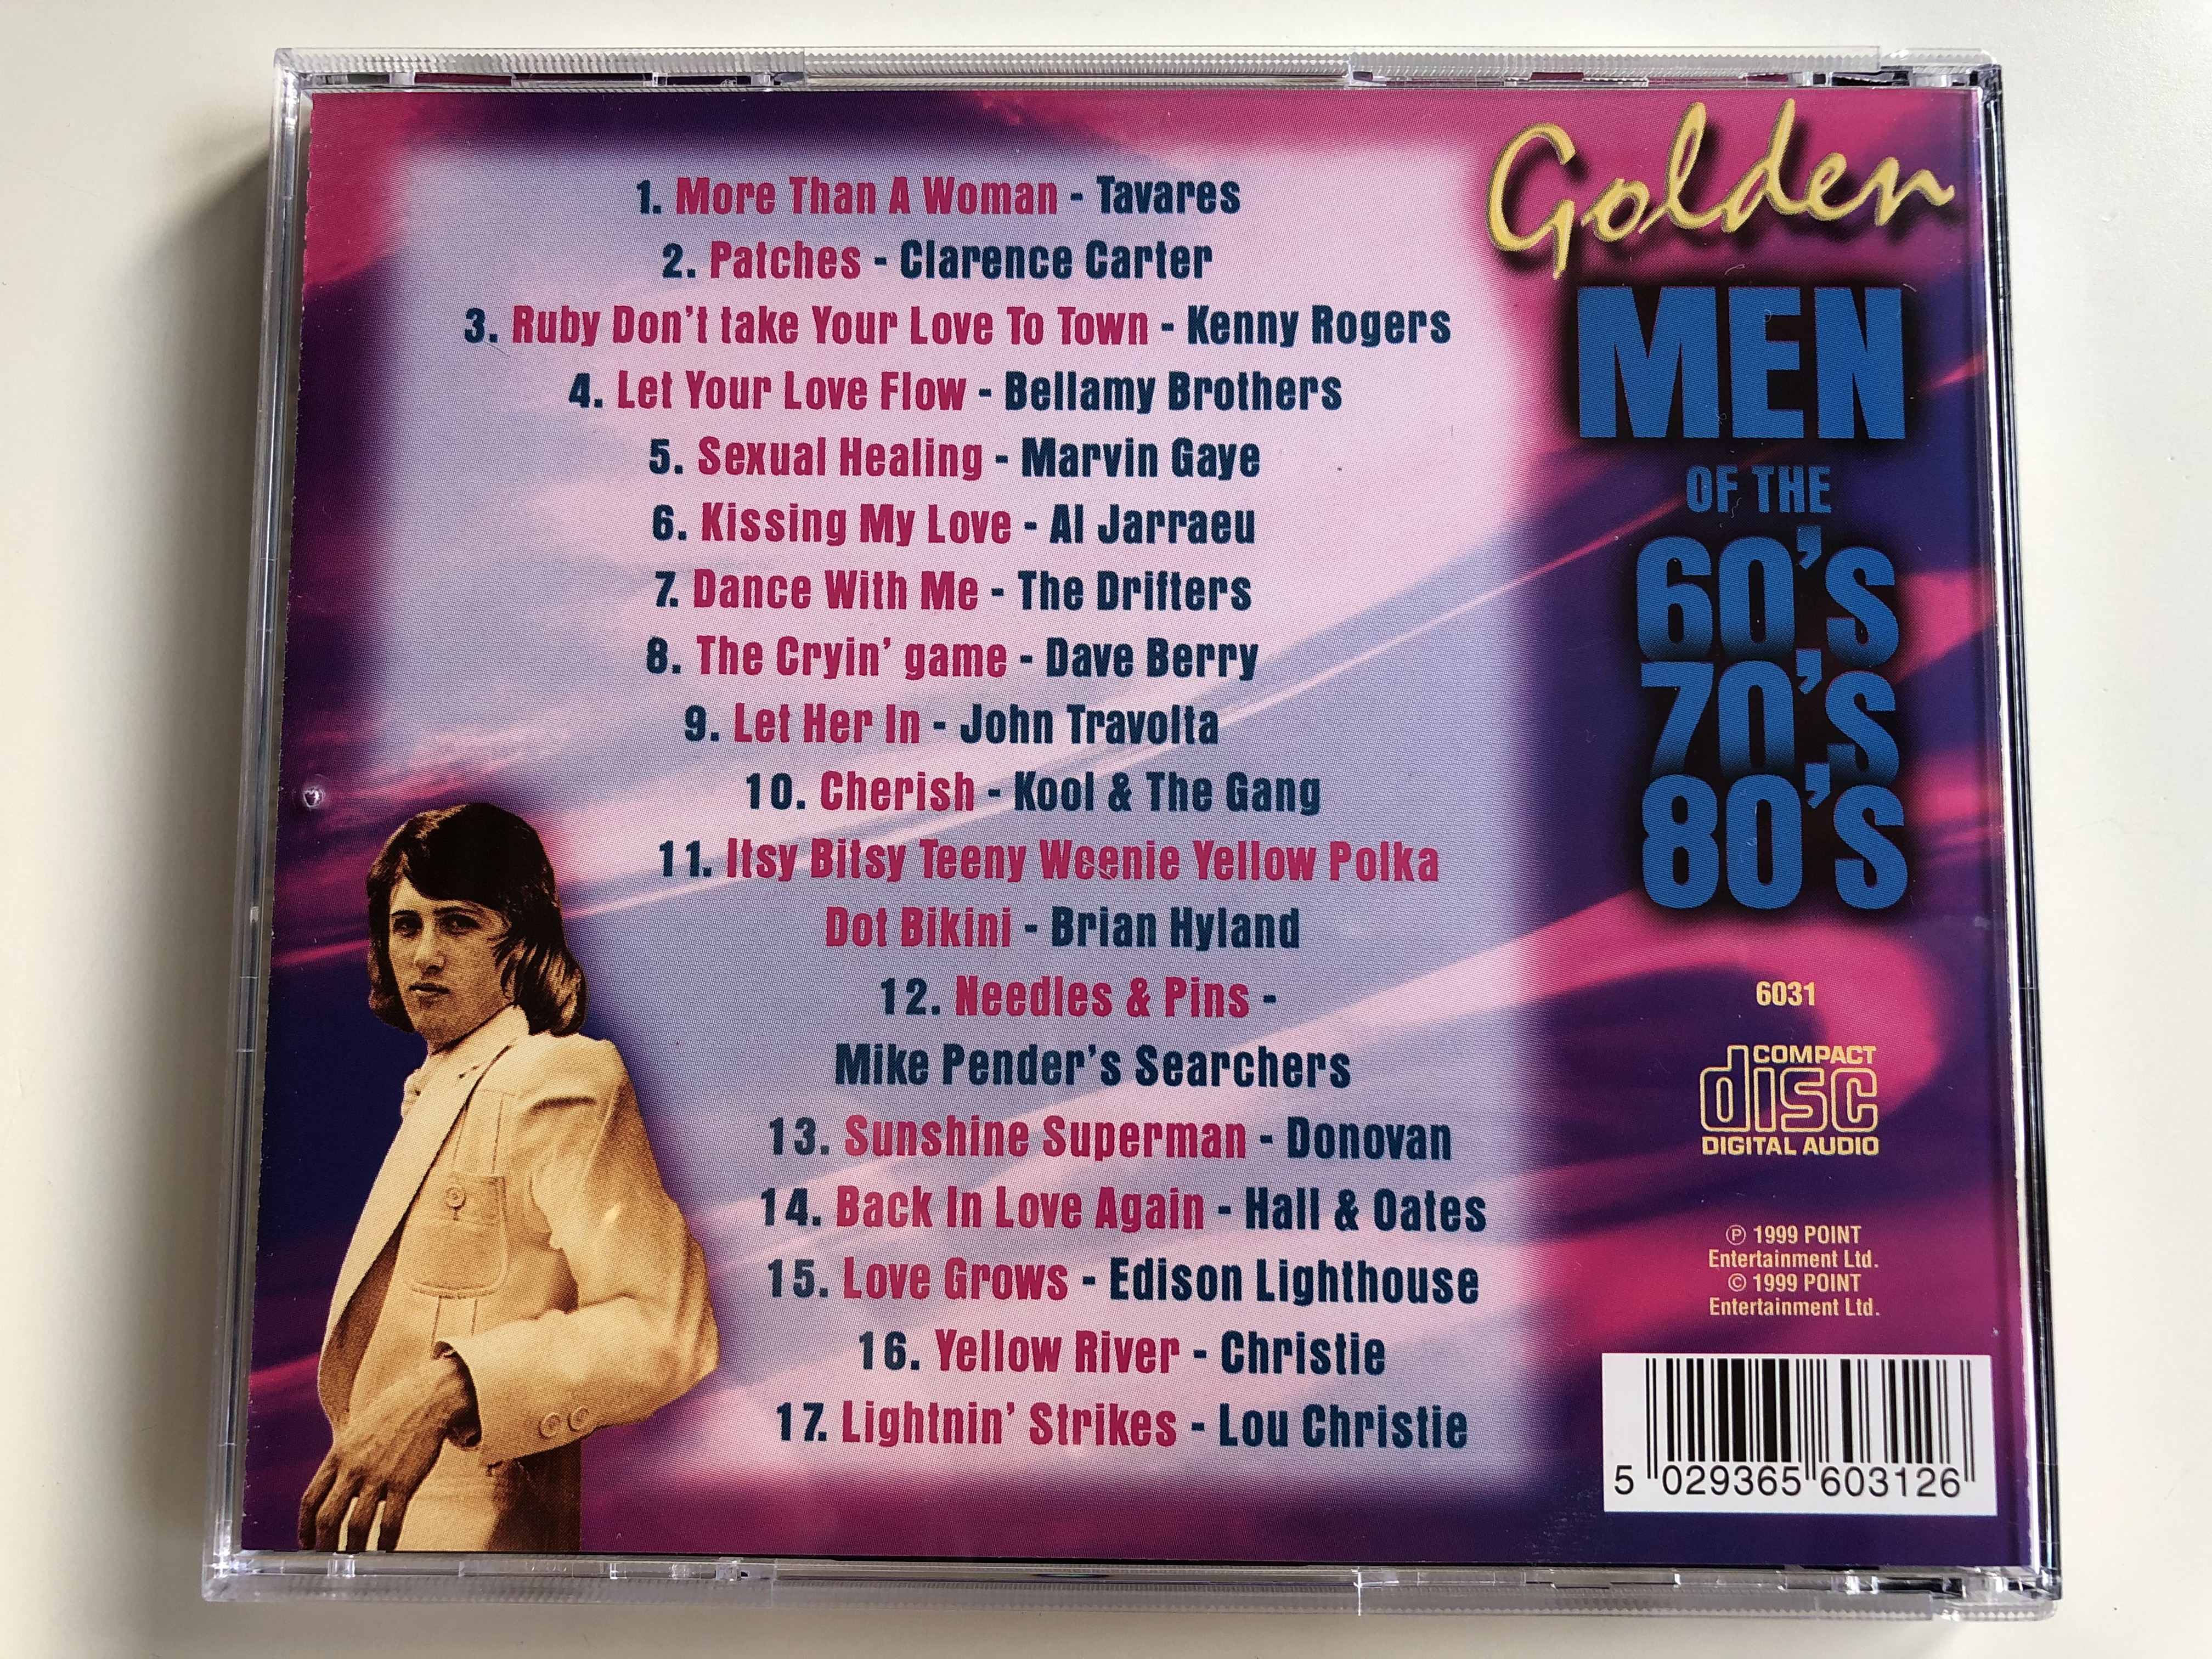 golden-men-of-the-60-s-70-s-80-s-cd2-tavares-kenny-rogers-john-travolta-donovan-christie-and-many-more-point-entertainment-ltd.-audio-cd-1999-6031-4-.jpg